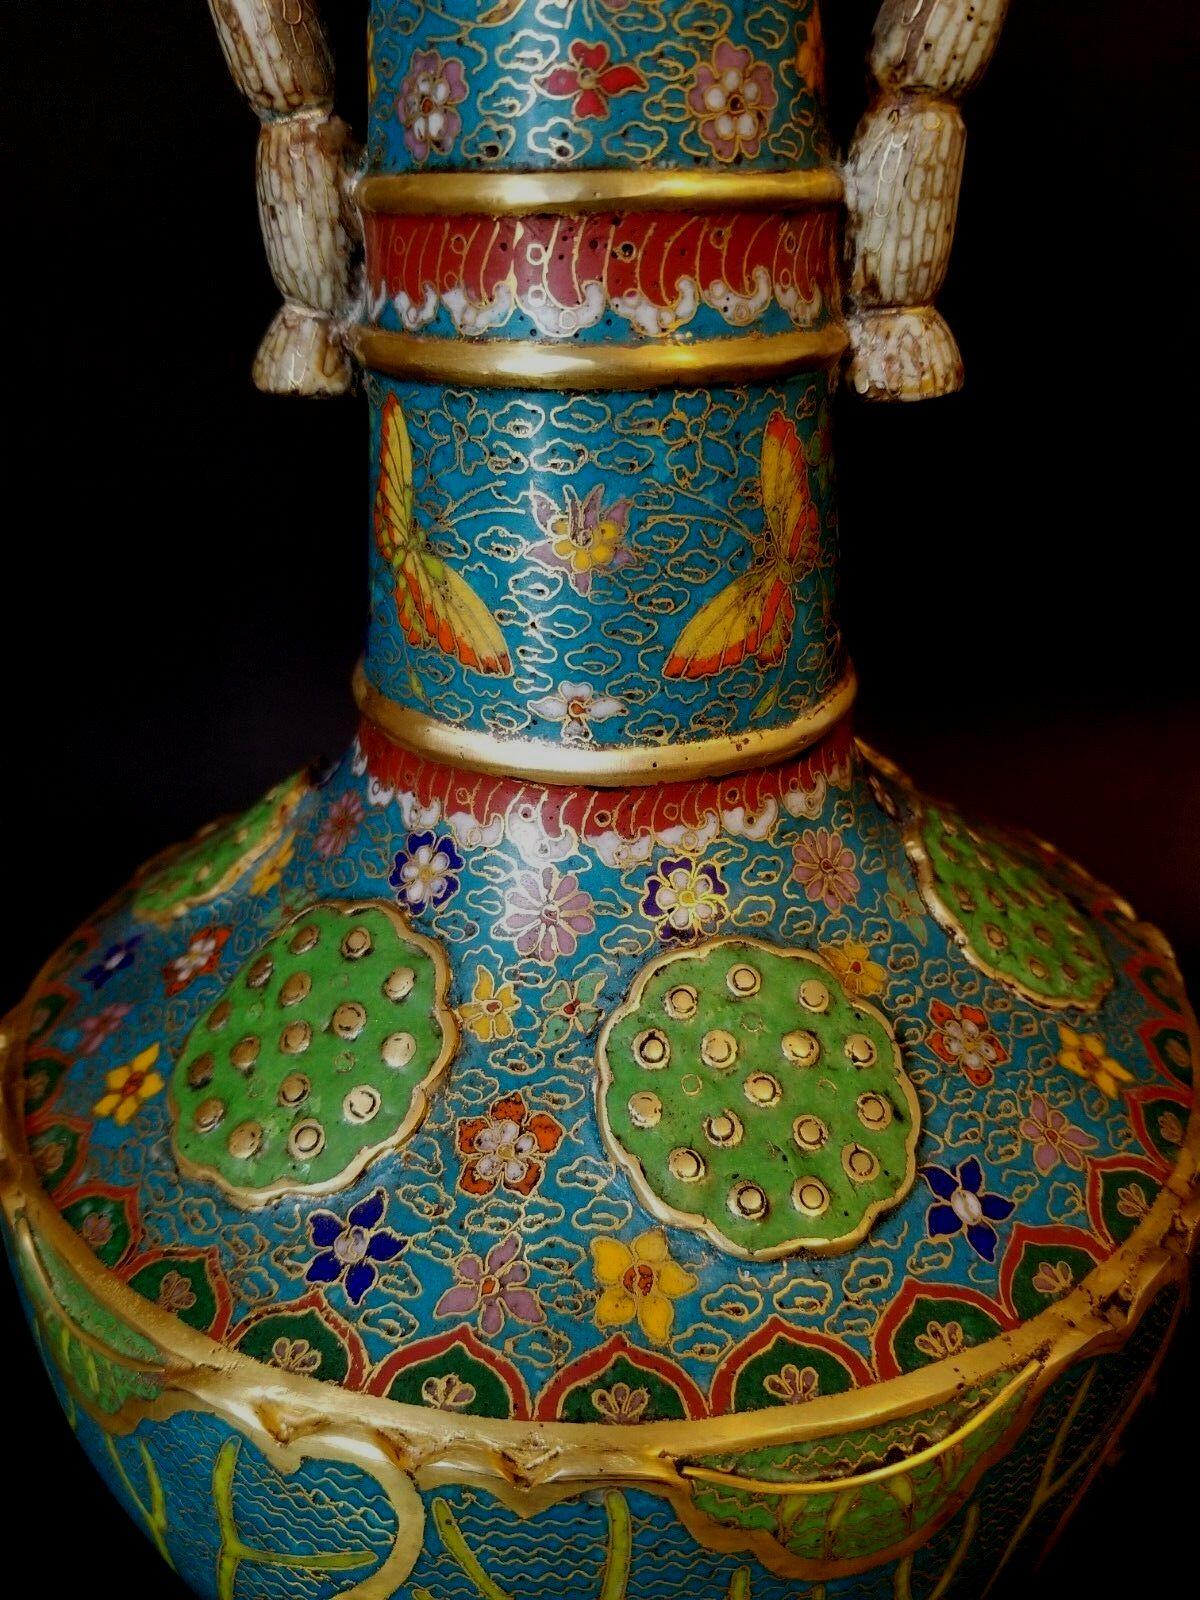 Chinese Export Large and Impressive Chinese Cloisonné Enamel Vase, 19th Century